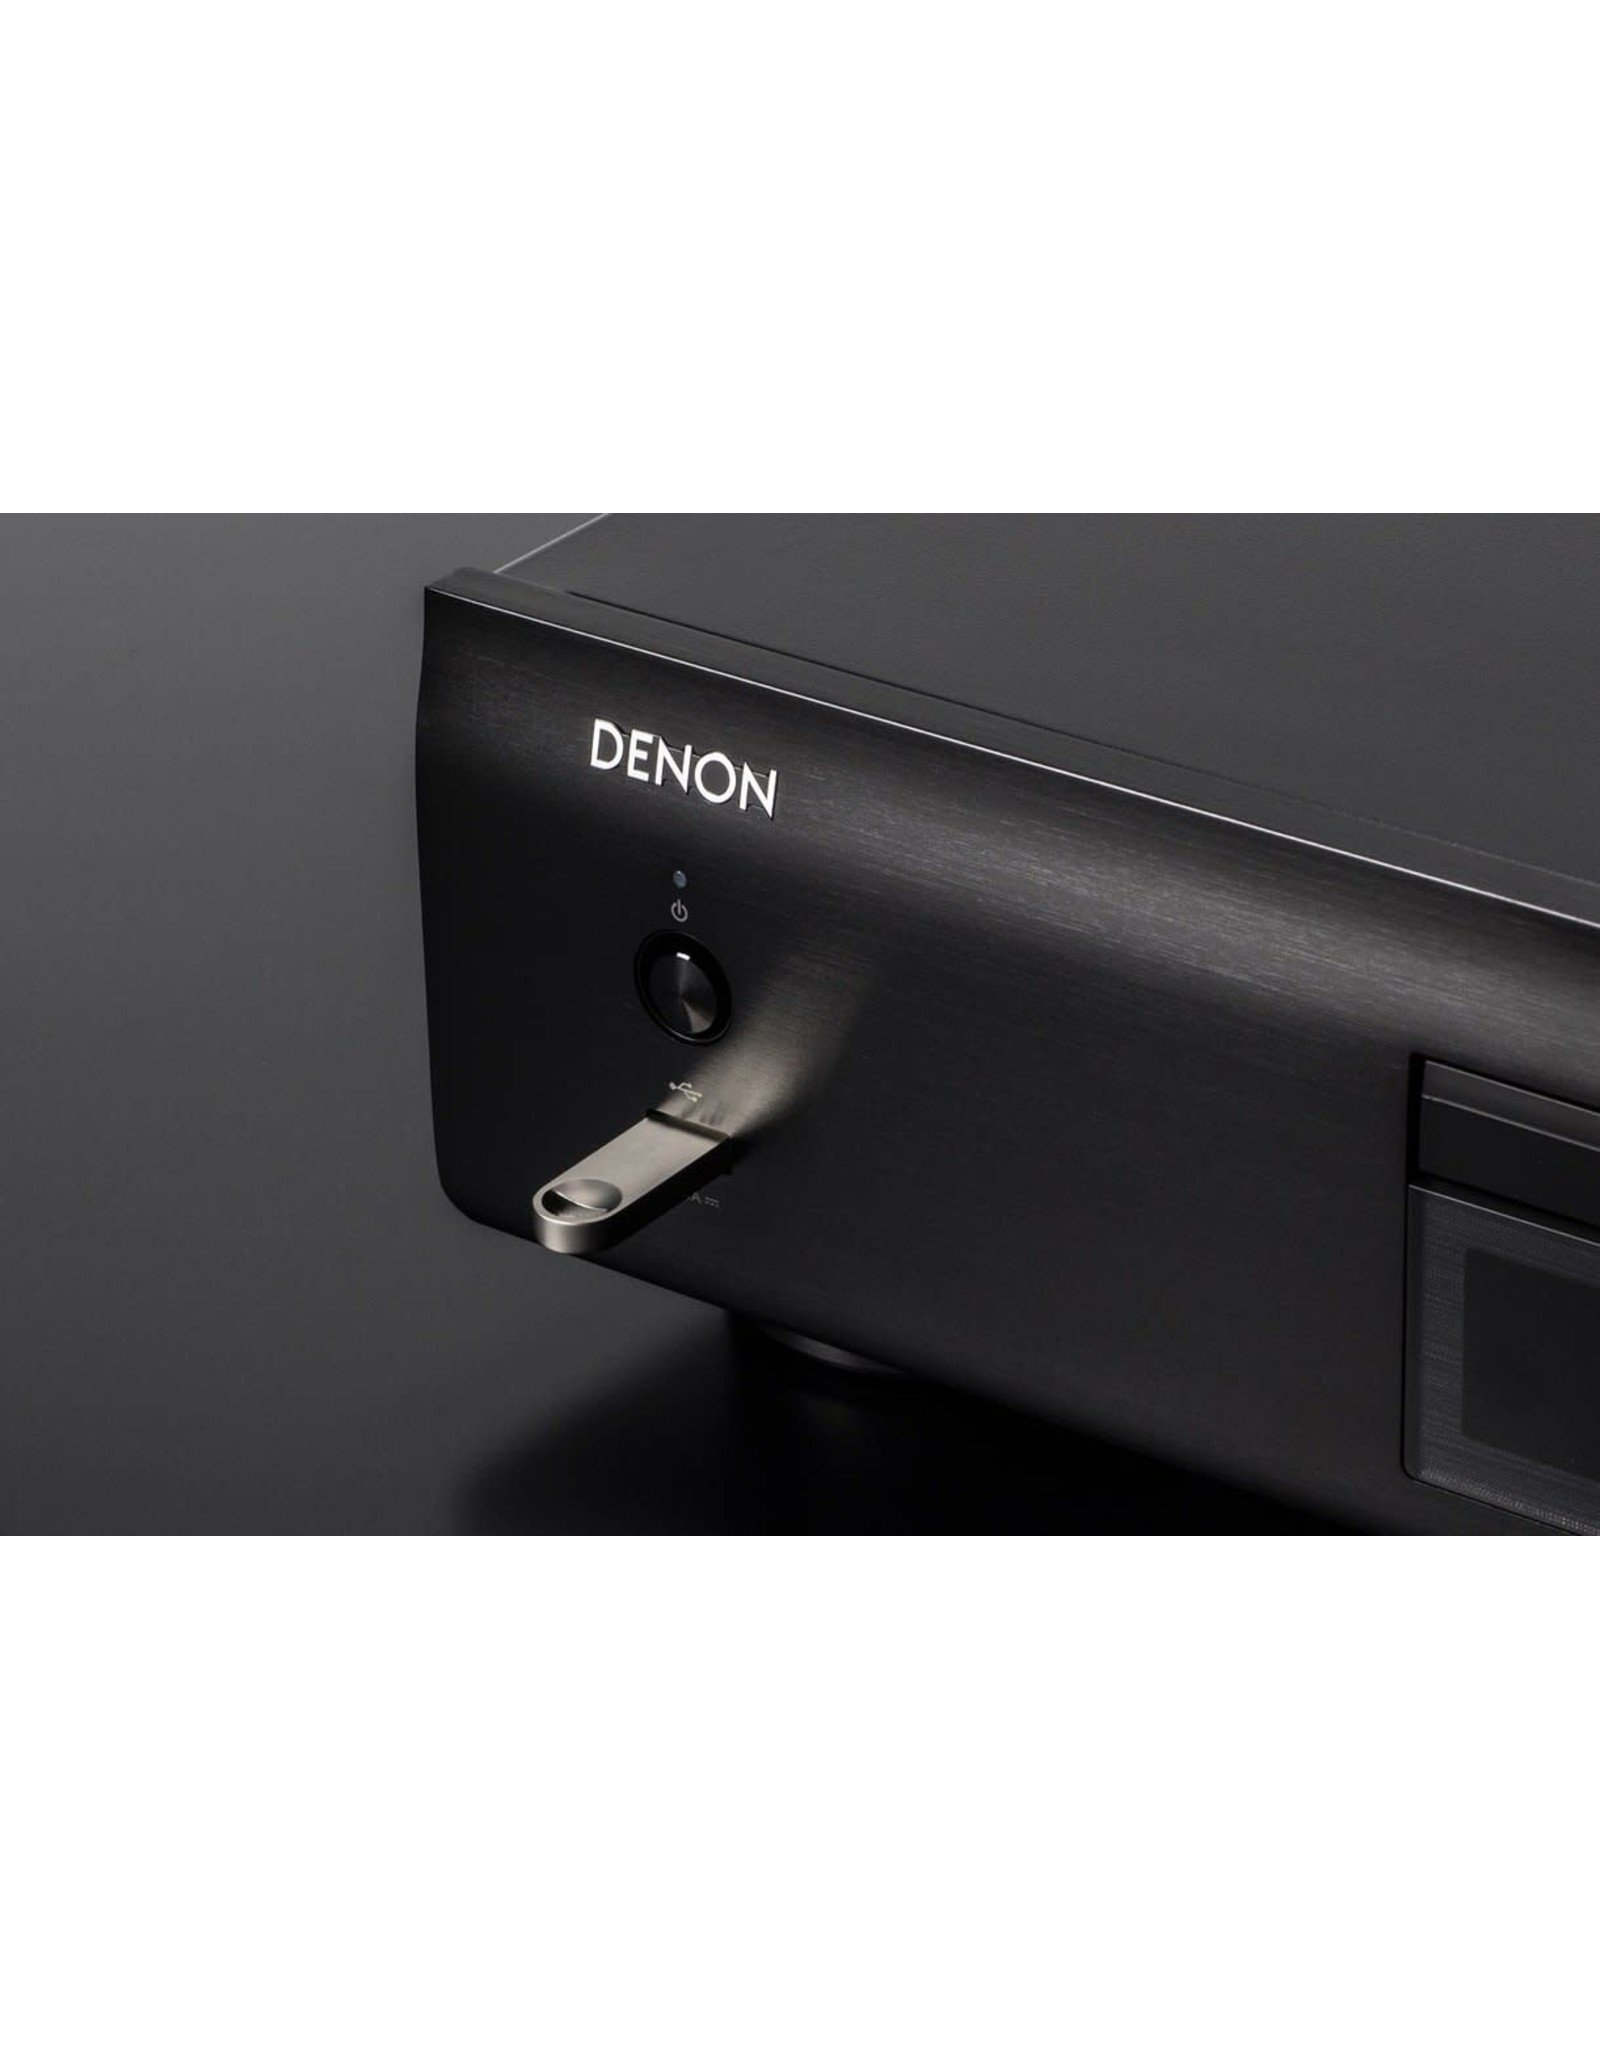 Denon Denon DCD-800NE CD Player DISCONTINUED